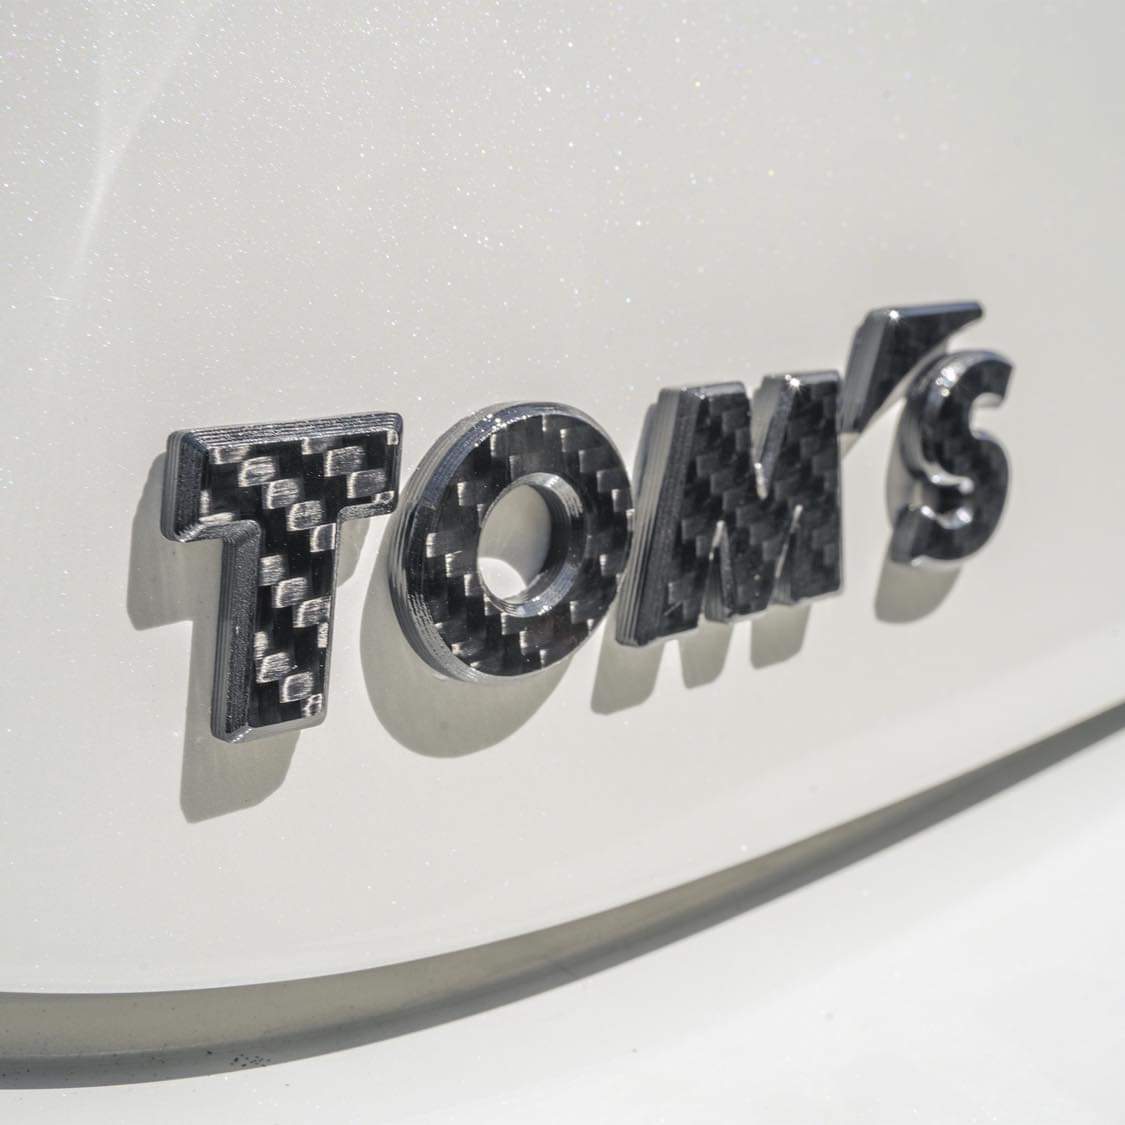 Toms Logo Emblem (Carbon Type)